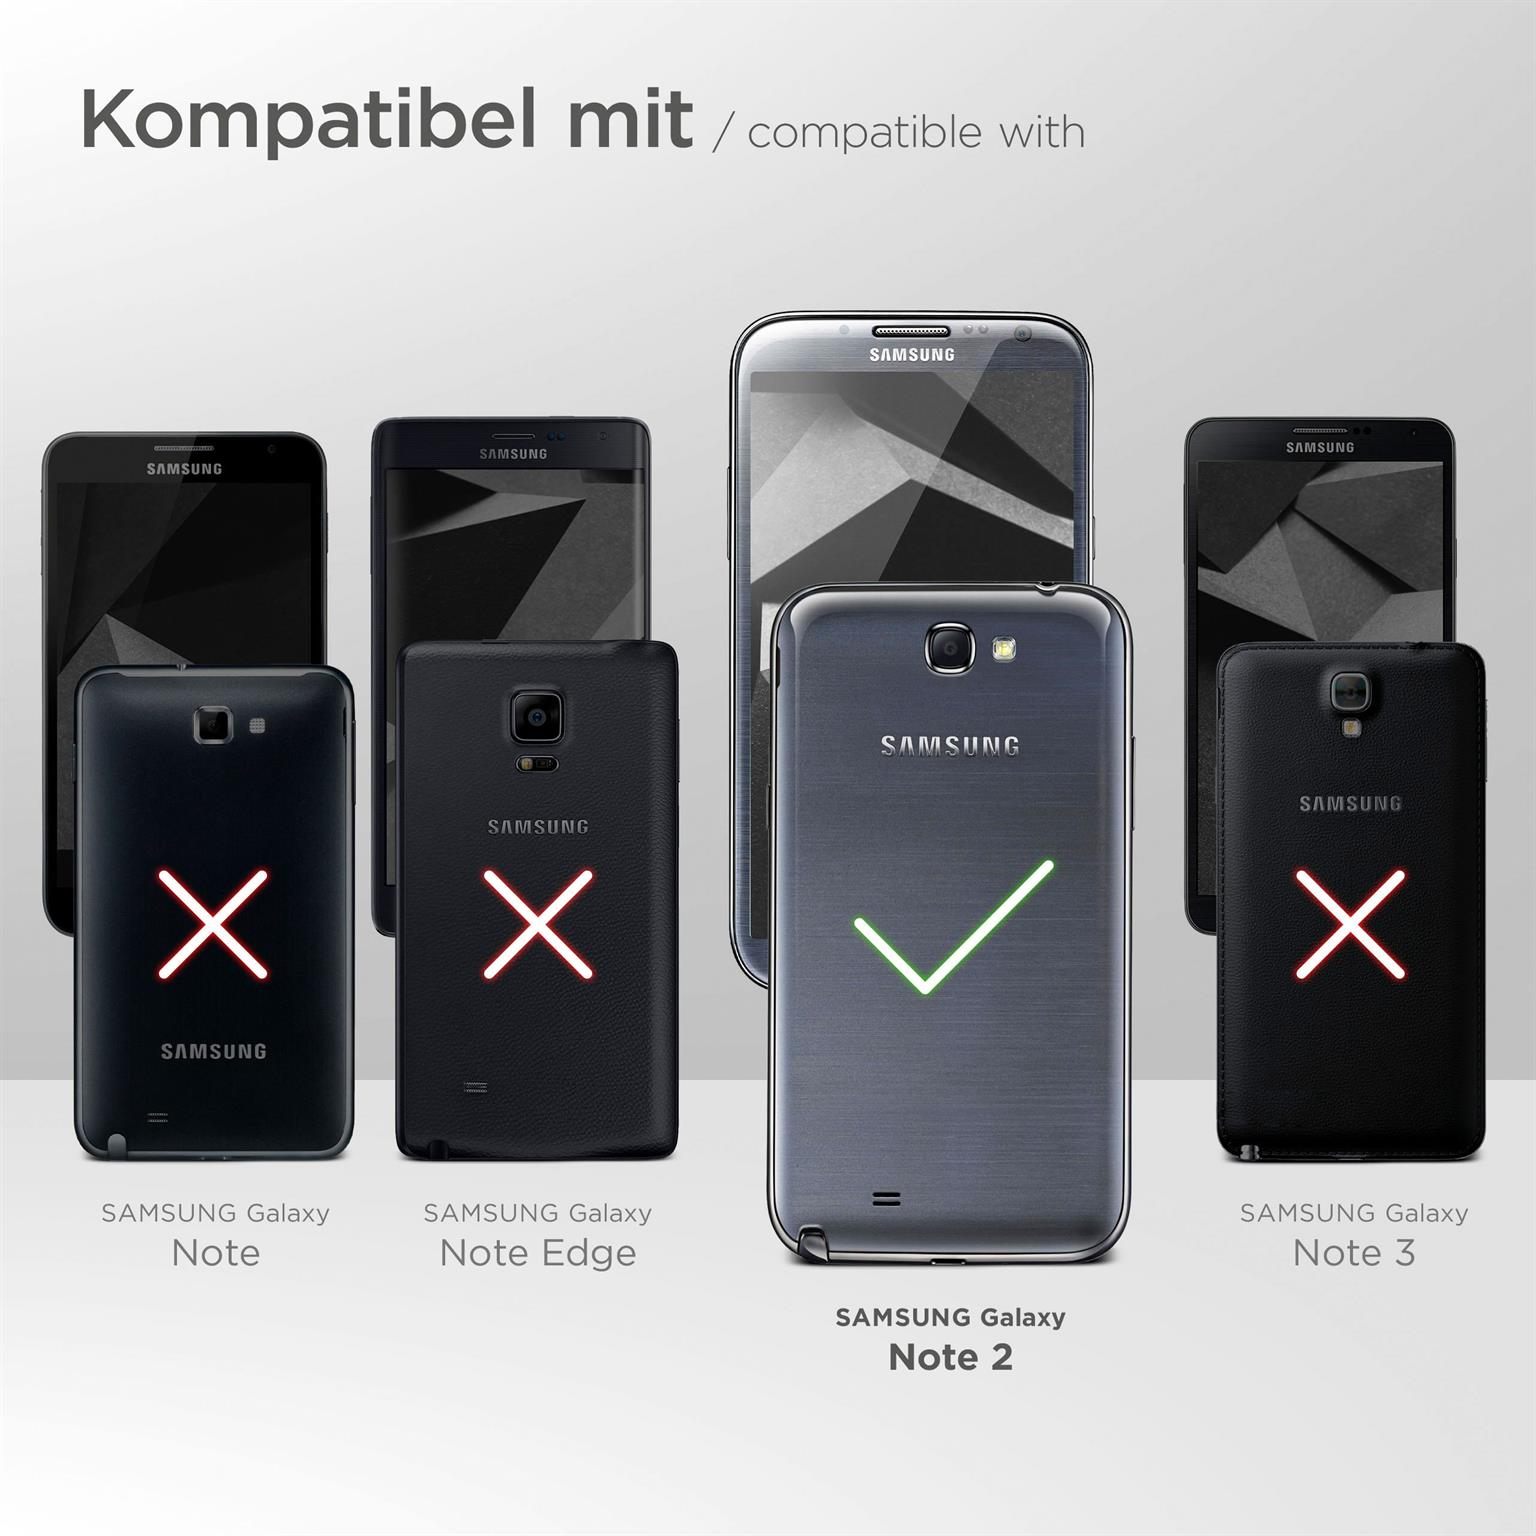 Oxide-Brown 2, Cover, MOEX Case, Galaxy Note Samsung, Flip Flip